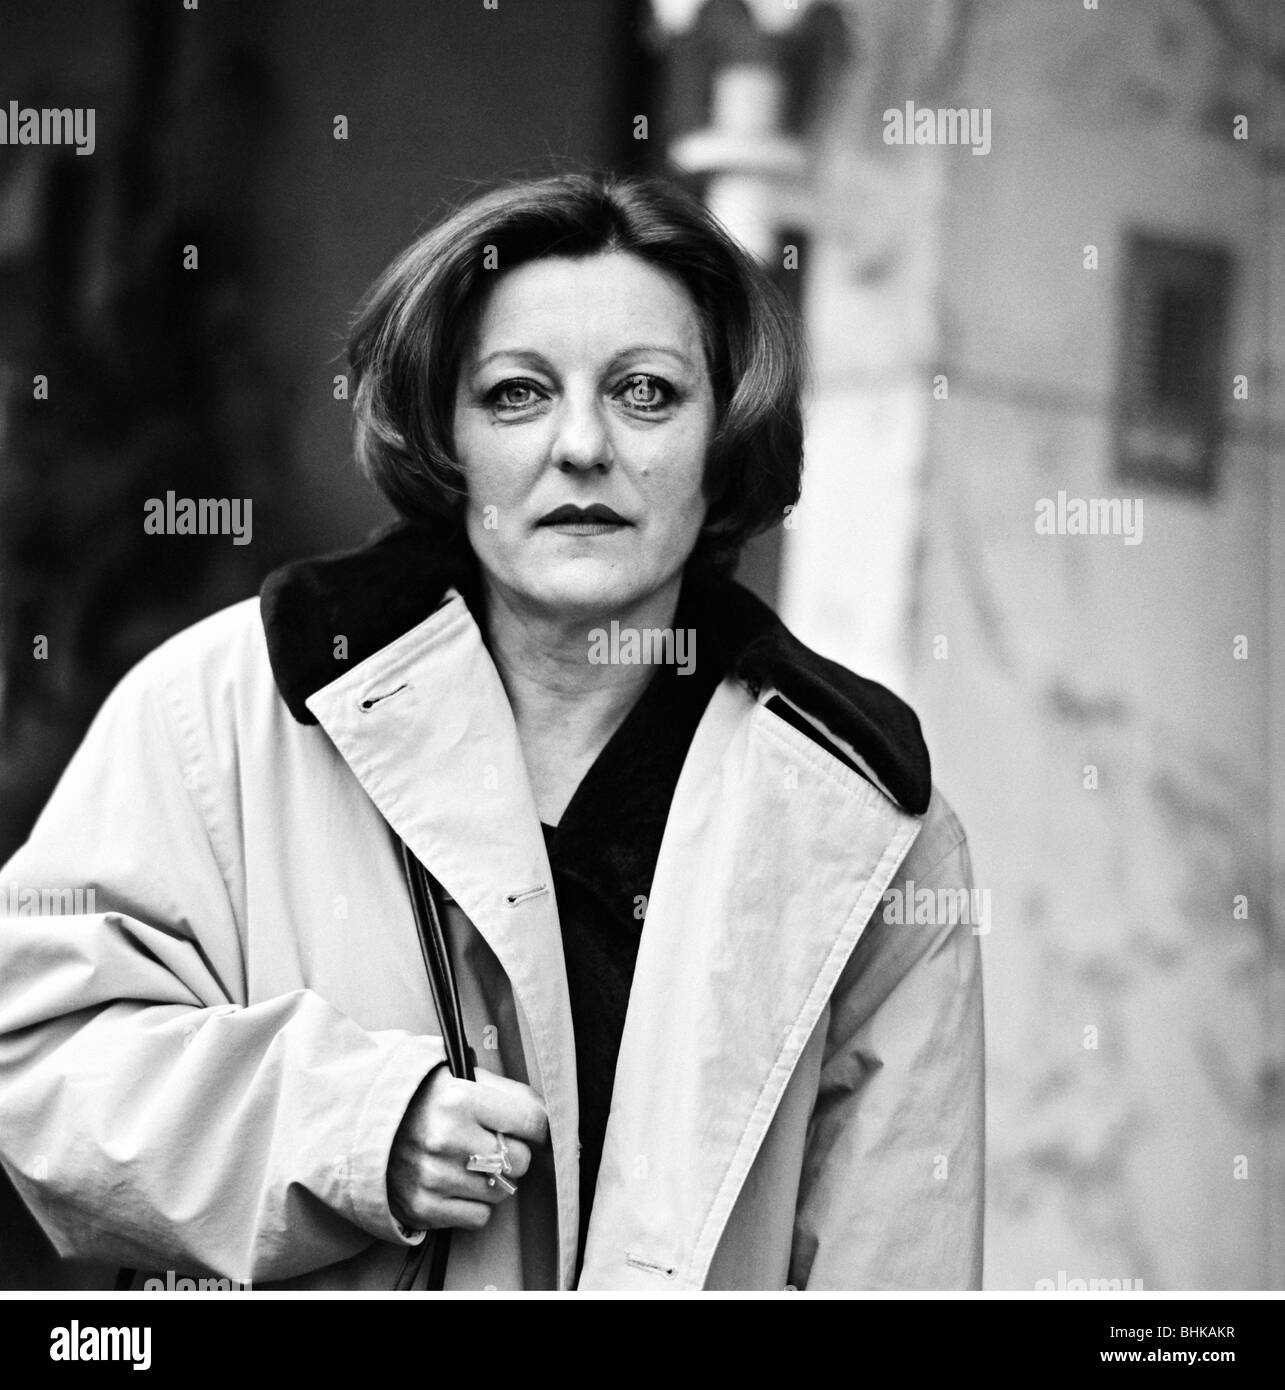 Mueller, Herta, * 17.8.1953, German author / writer, portrait, 12.11.1998, Stock Photo